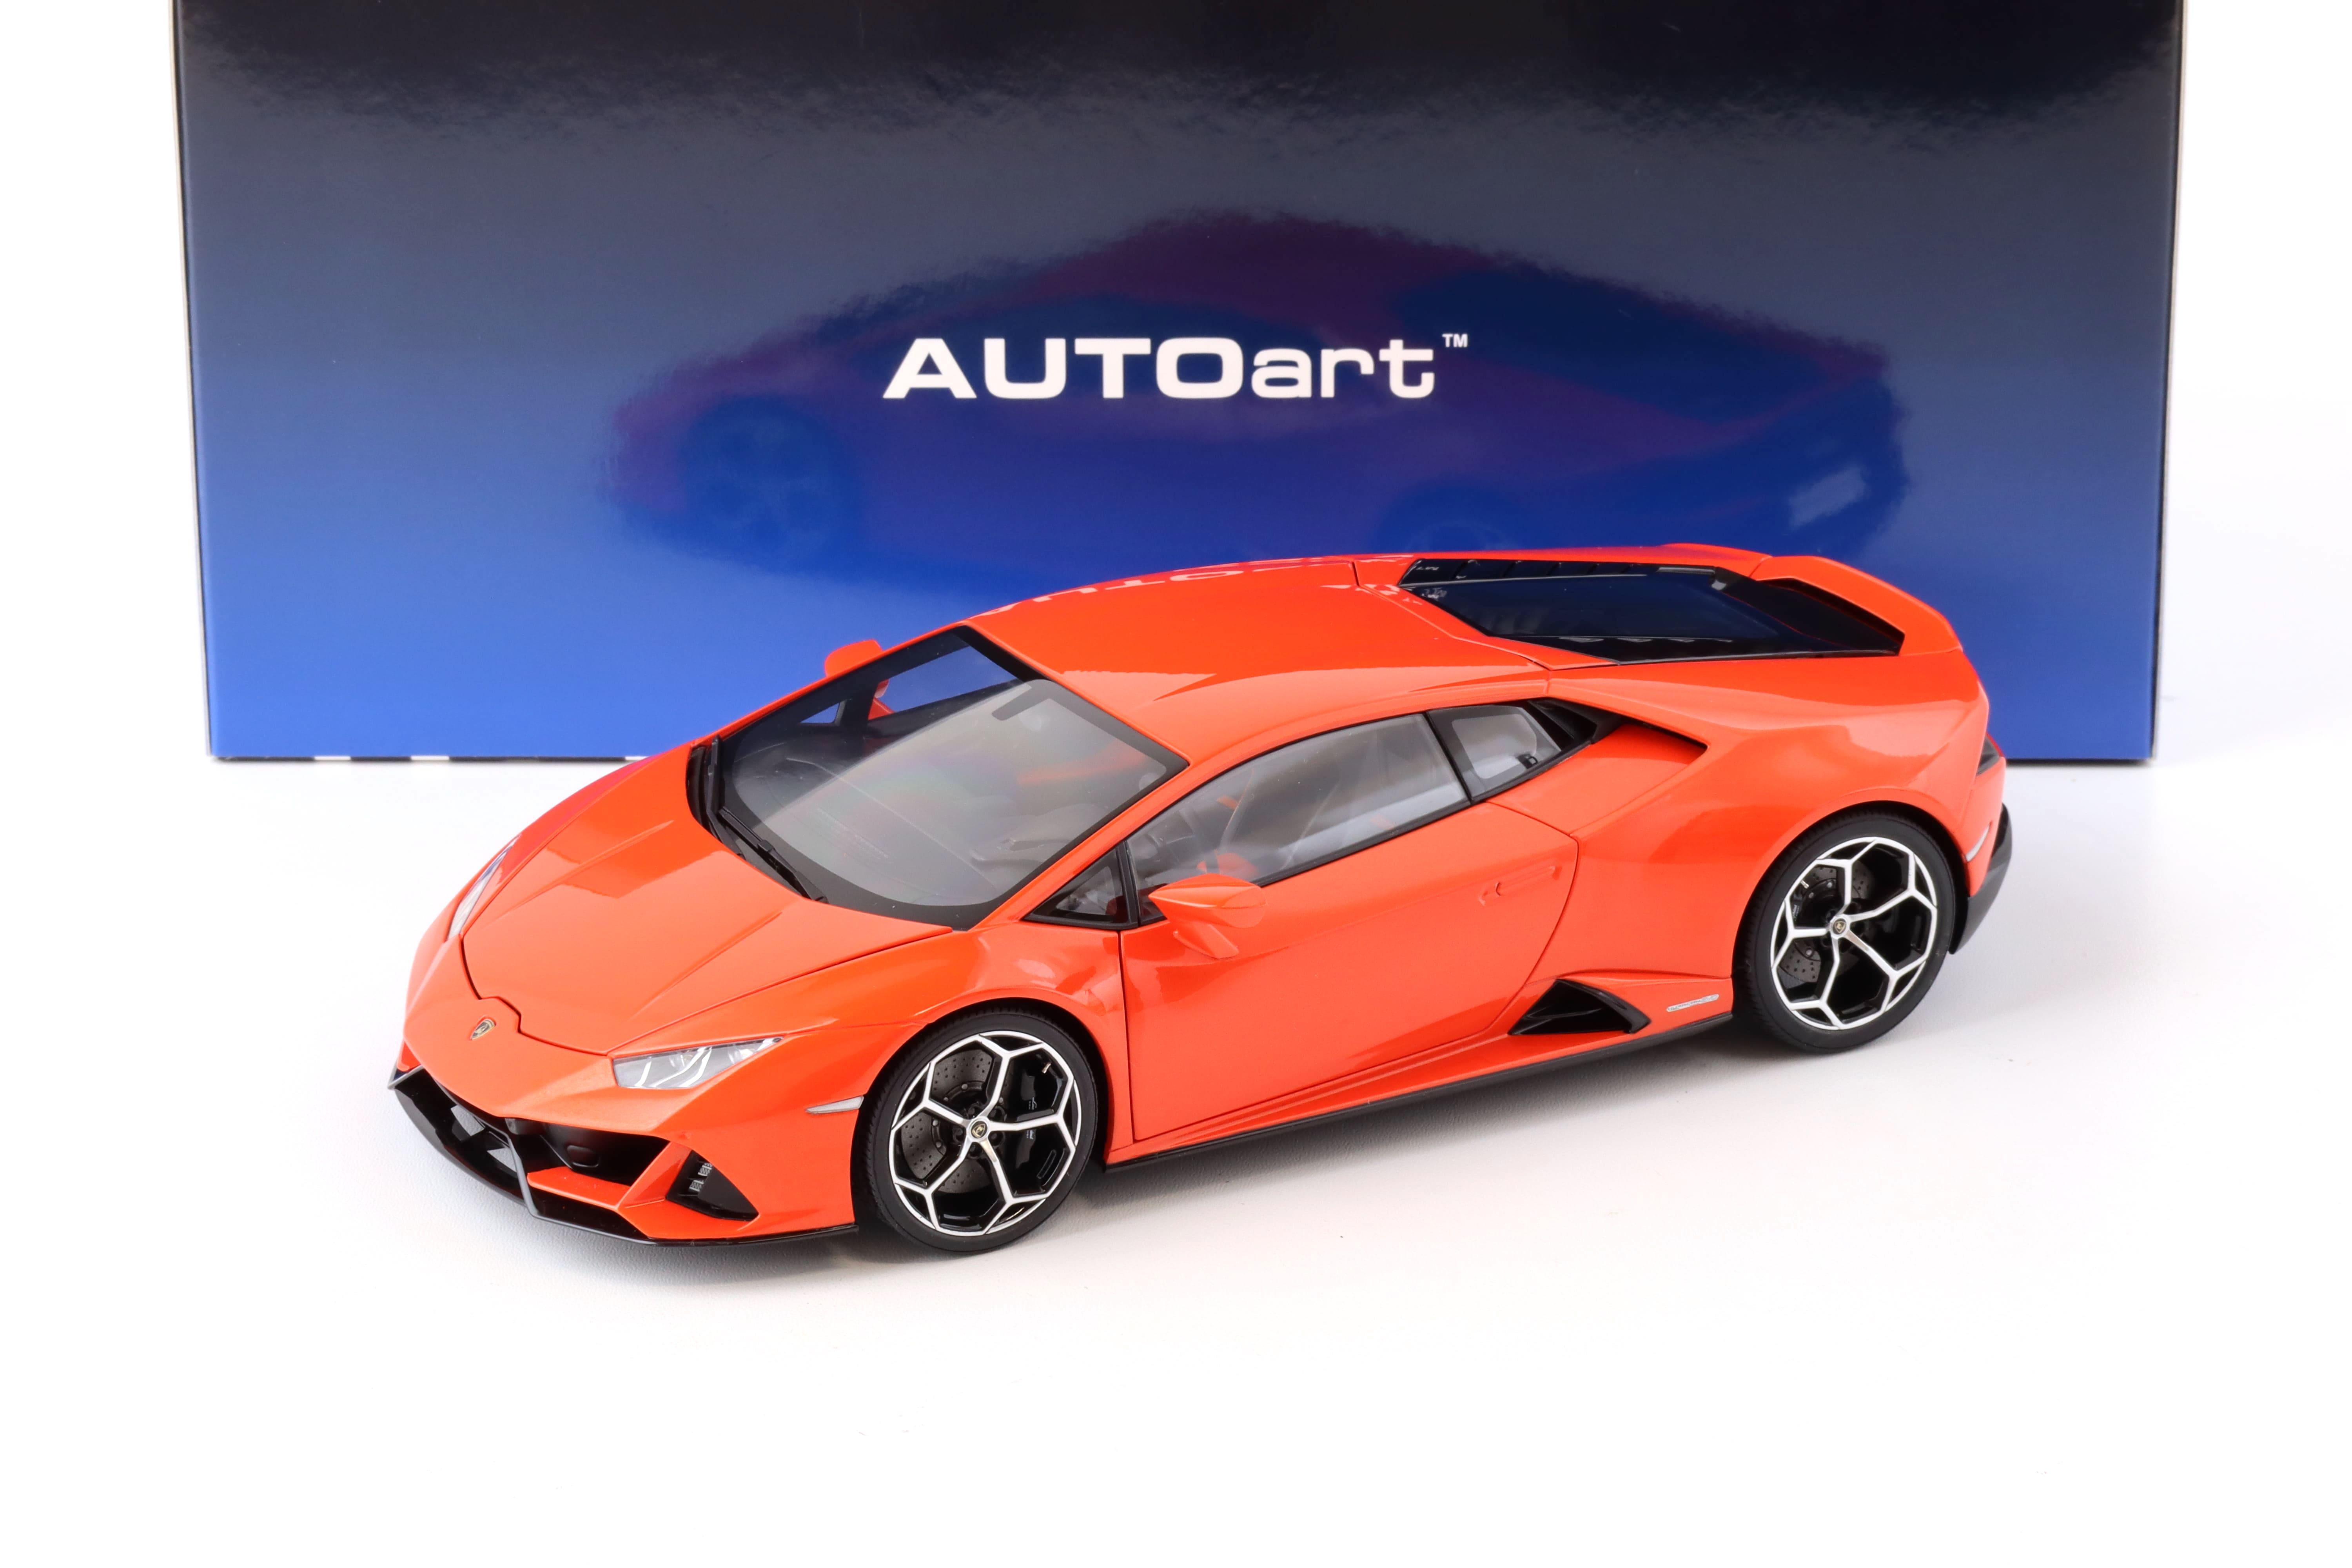 1:18 AUTOart Lamborghini Huracan Evo 2019 arancio xanto orange 79214